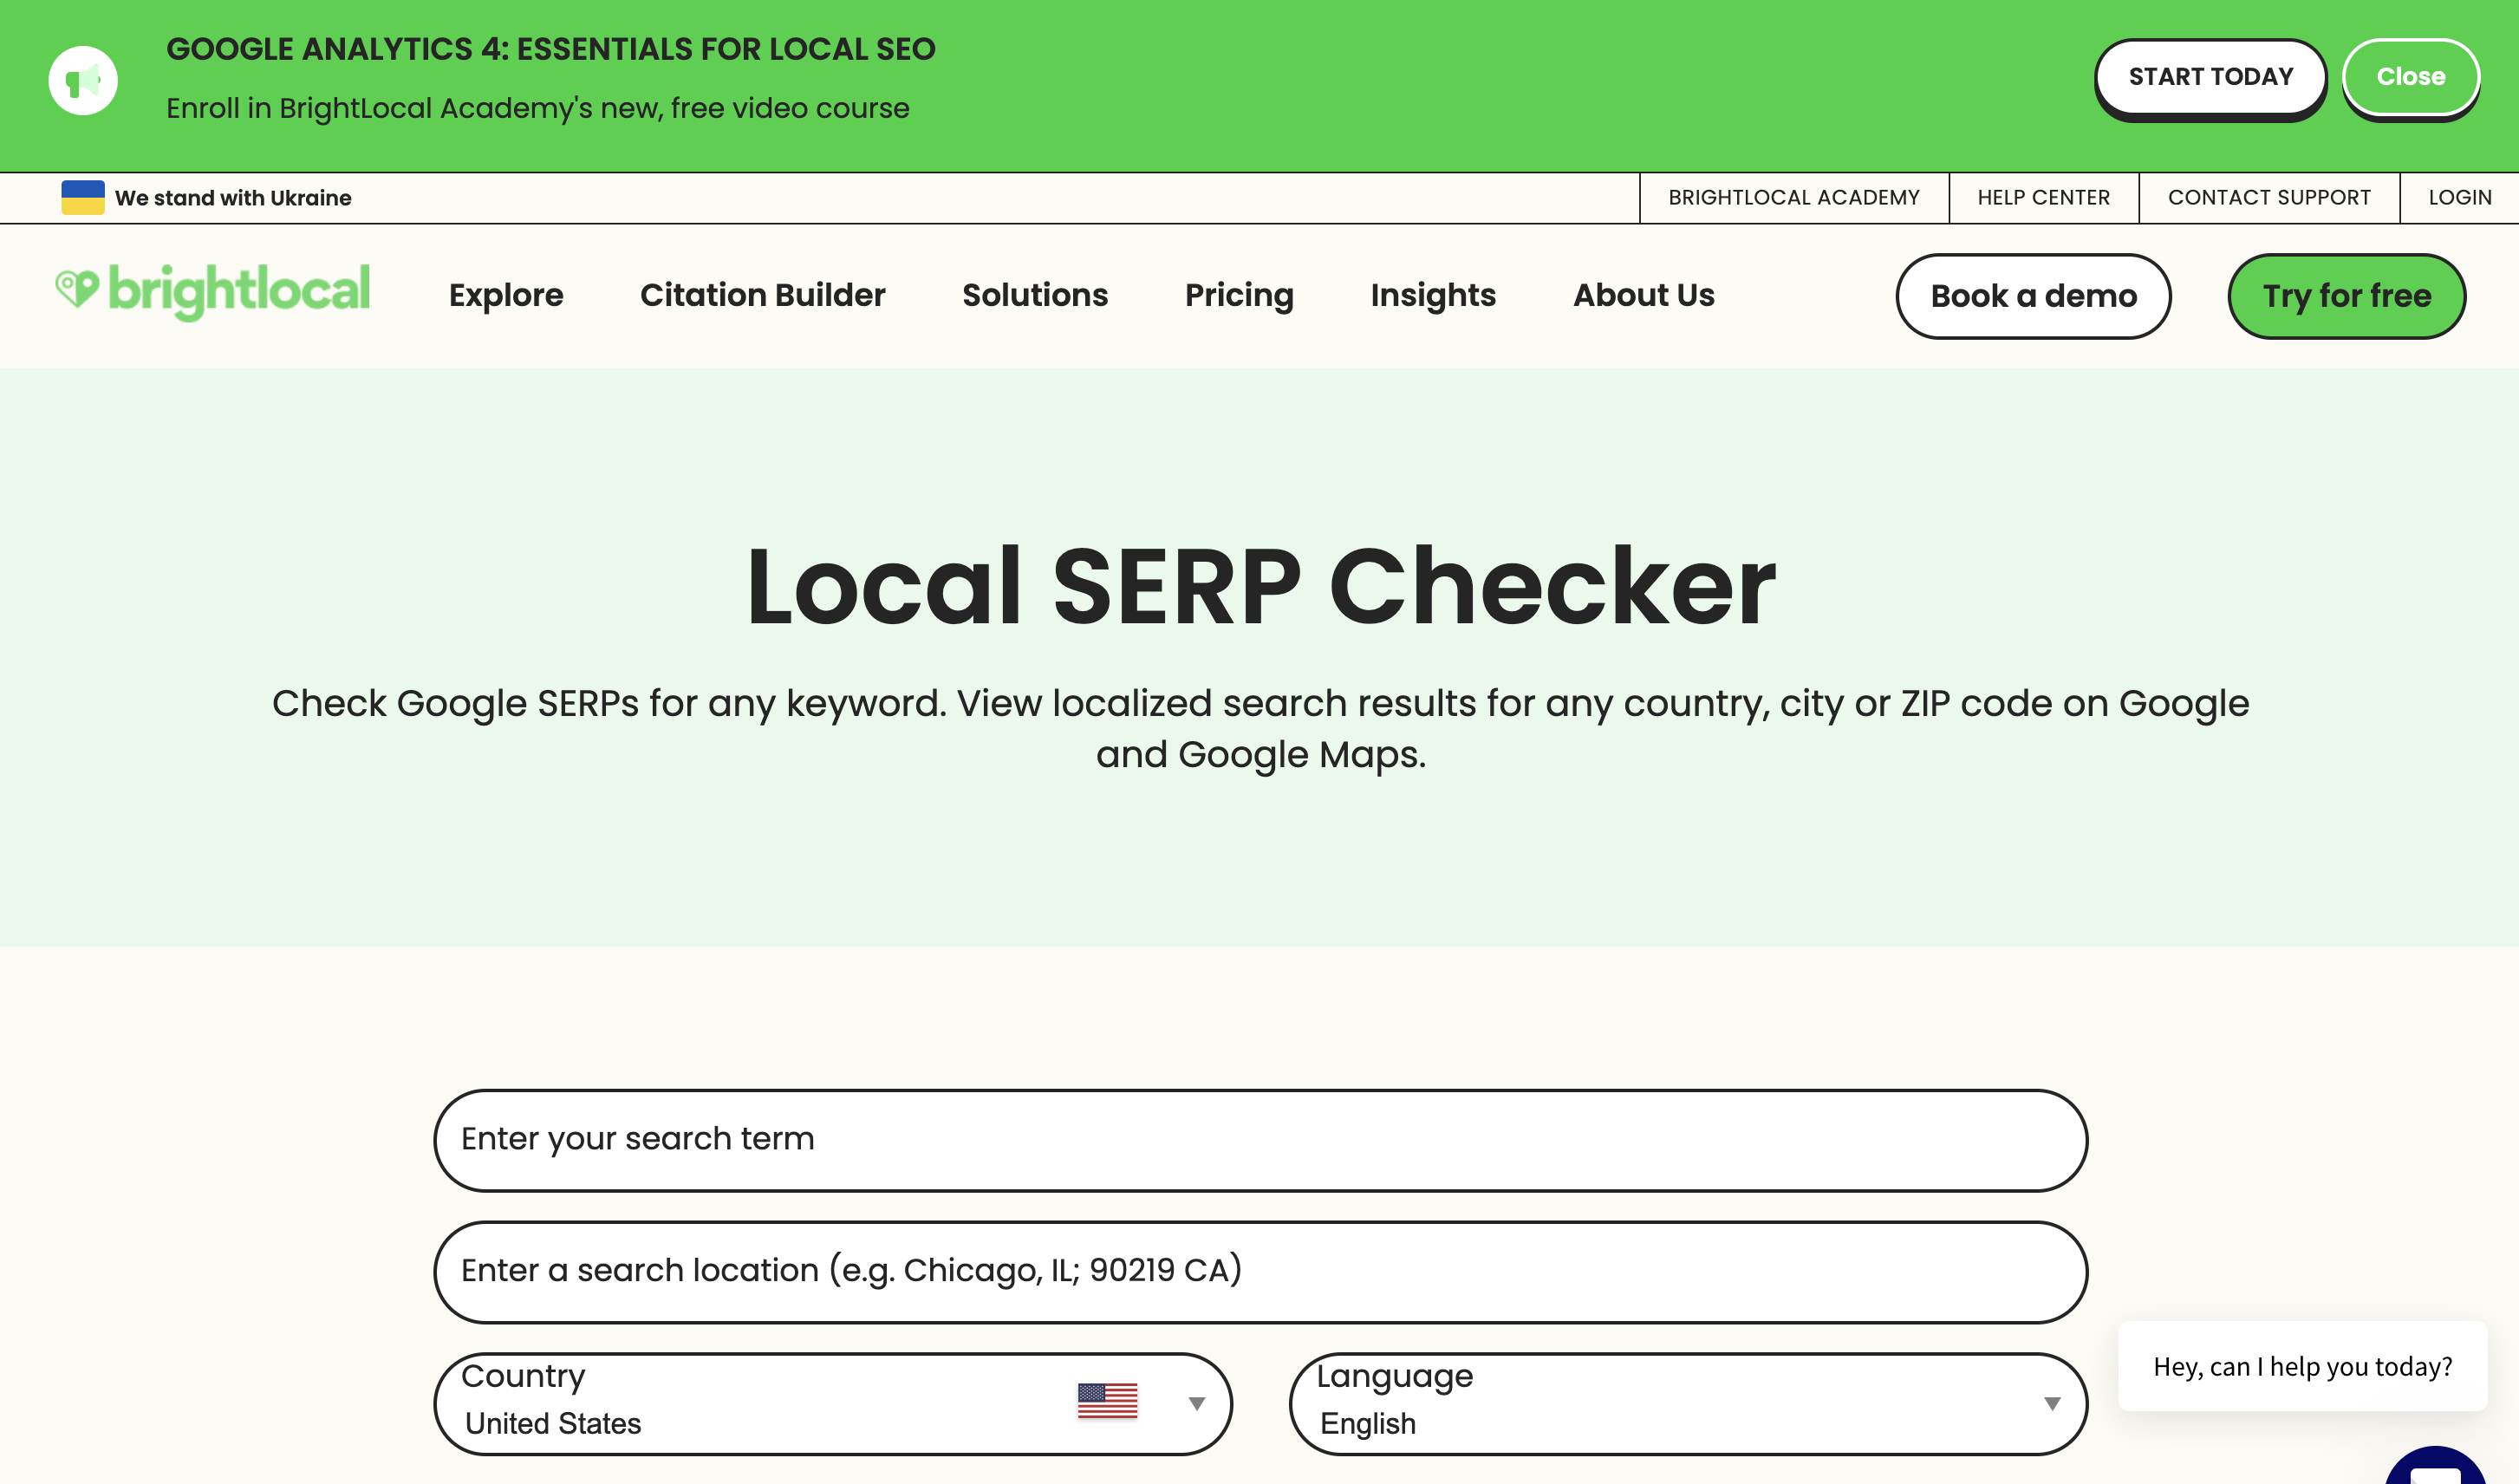 Brightlocal’s Local SERP Checker website